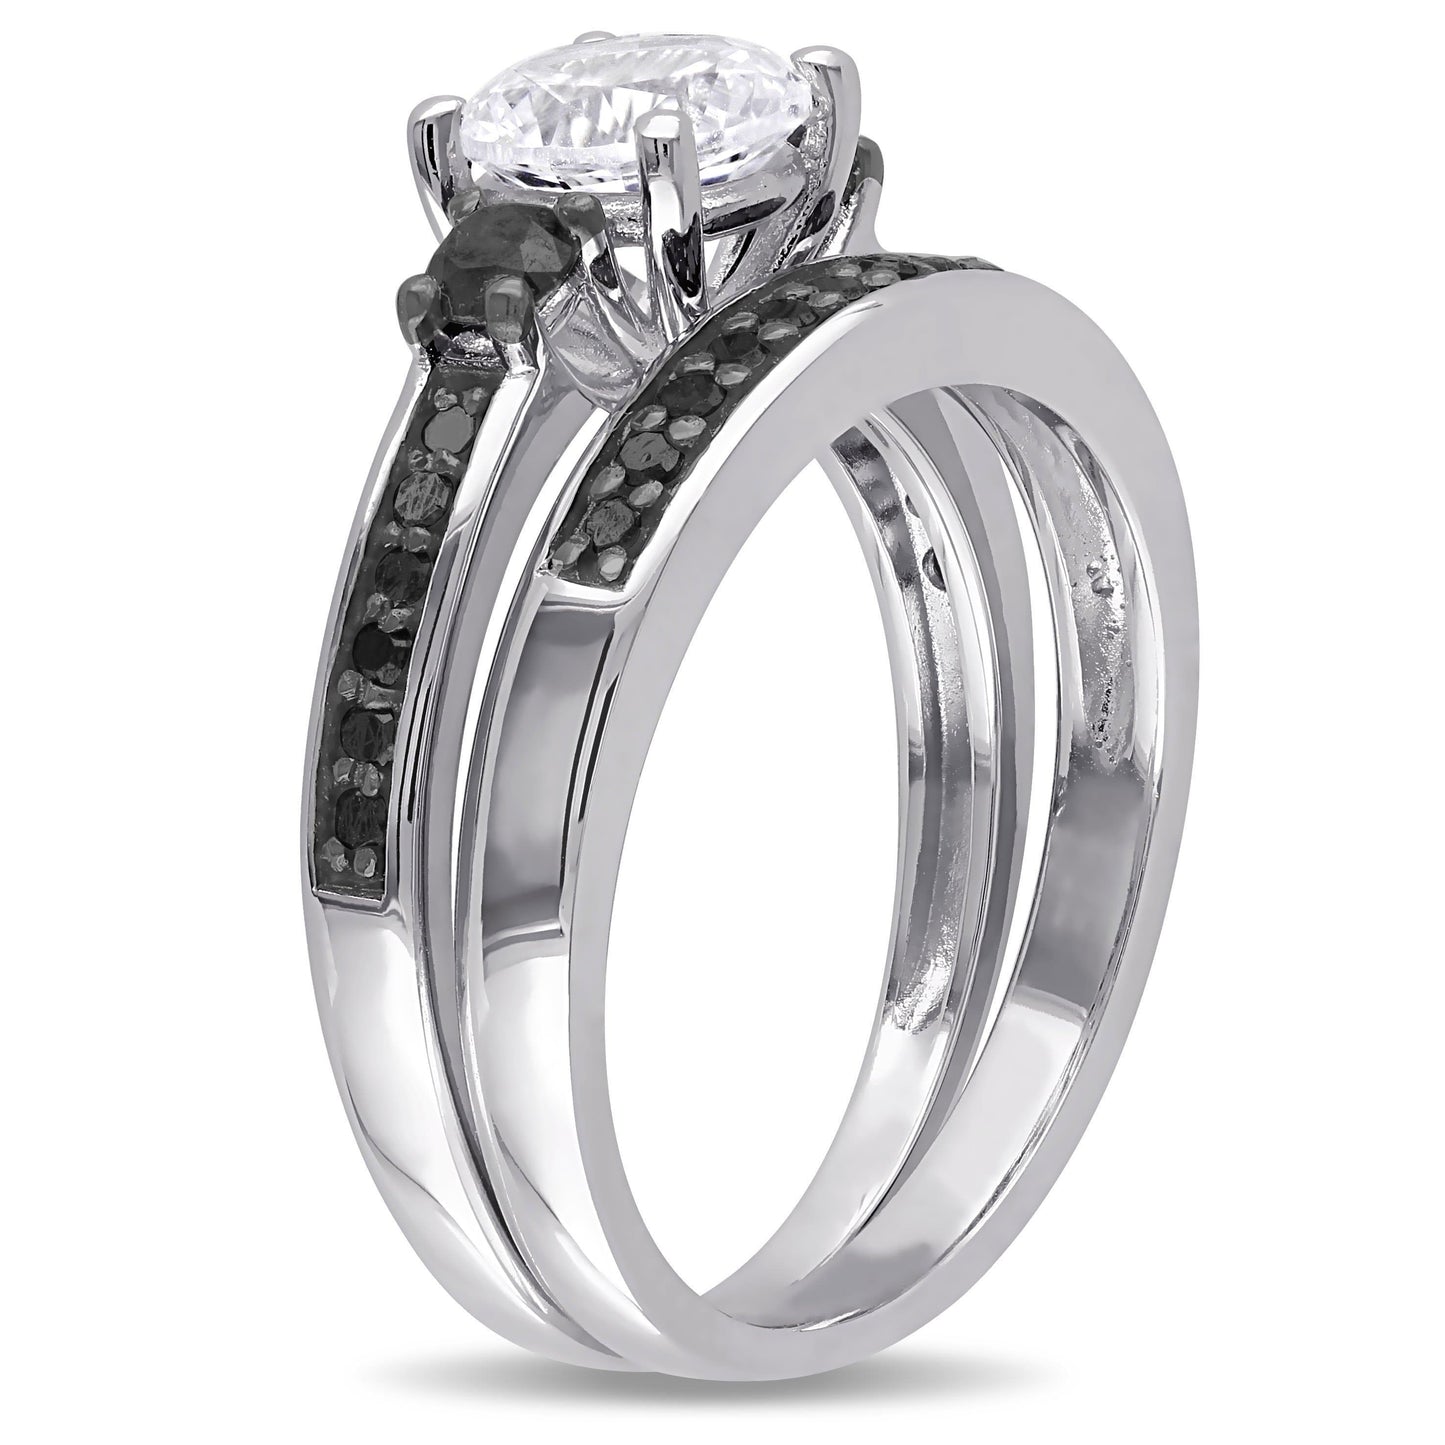 Black Diamond & White Sapphire Ring Set in Sterling Silver